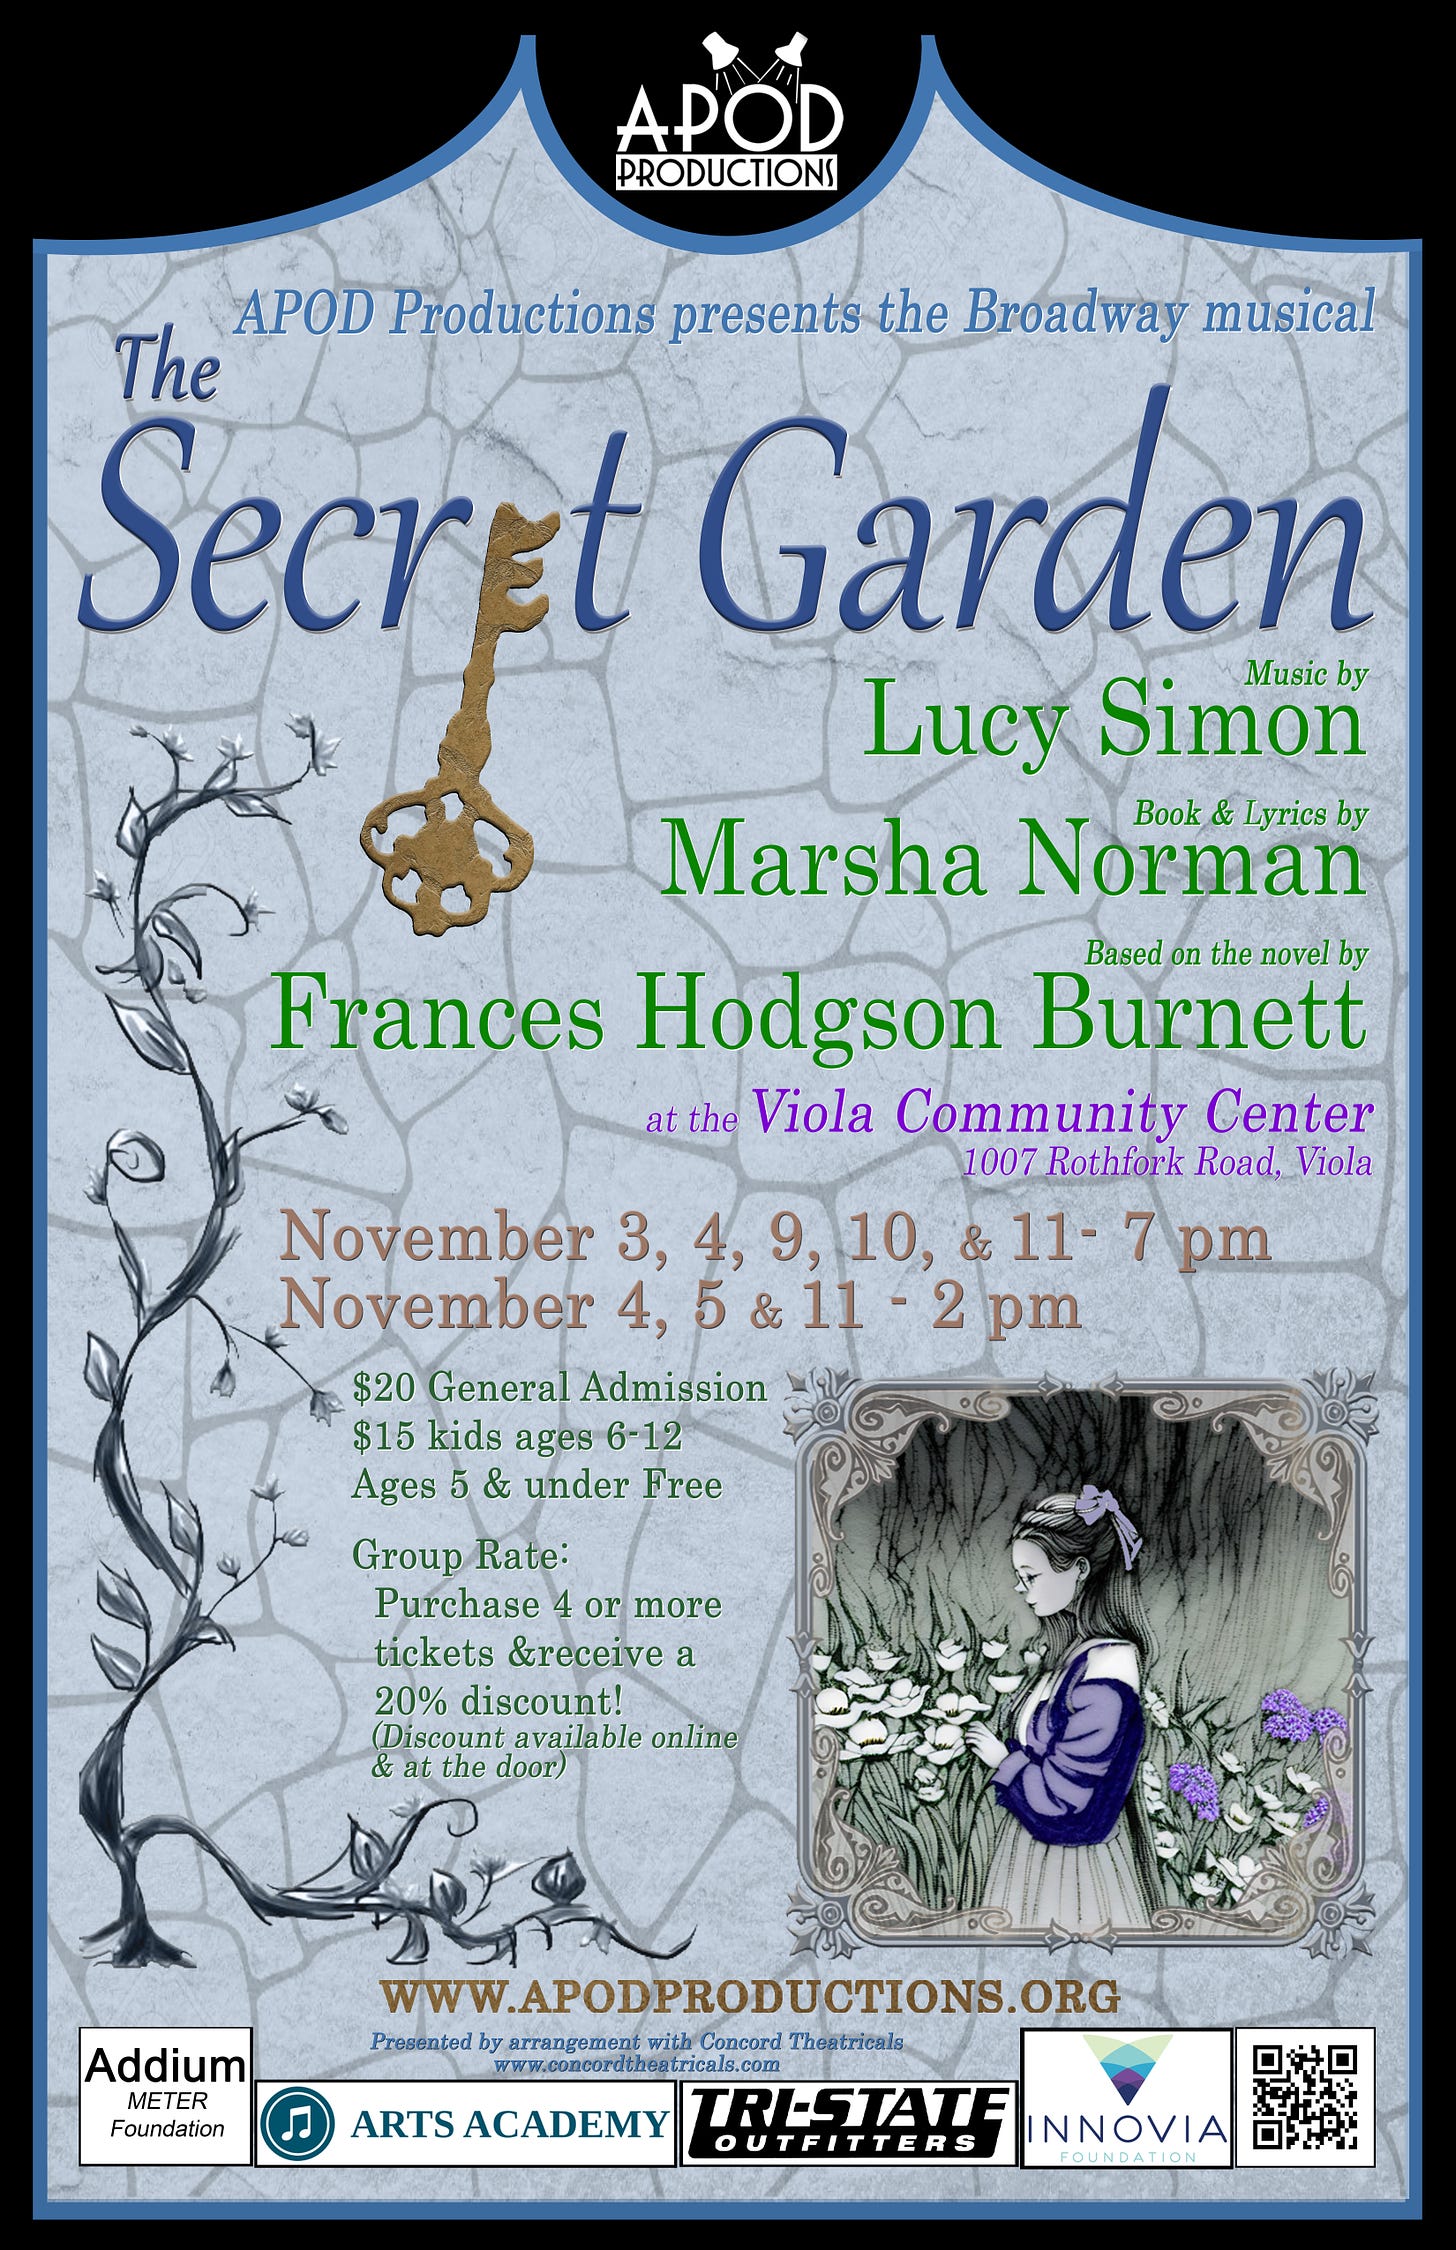 A poster for The Secret Garden